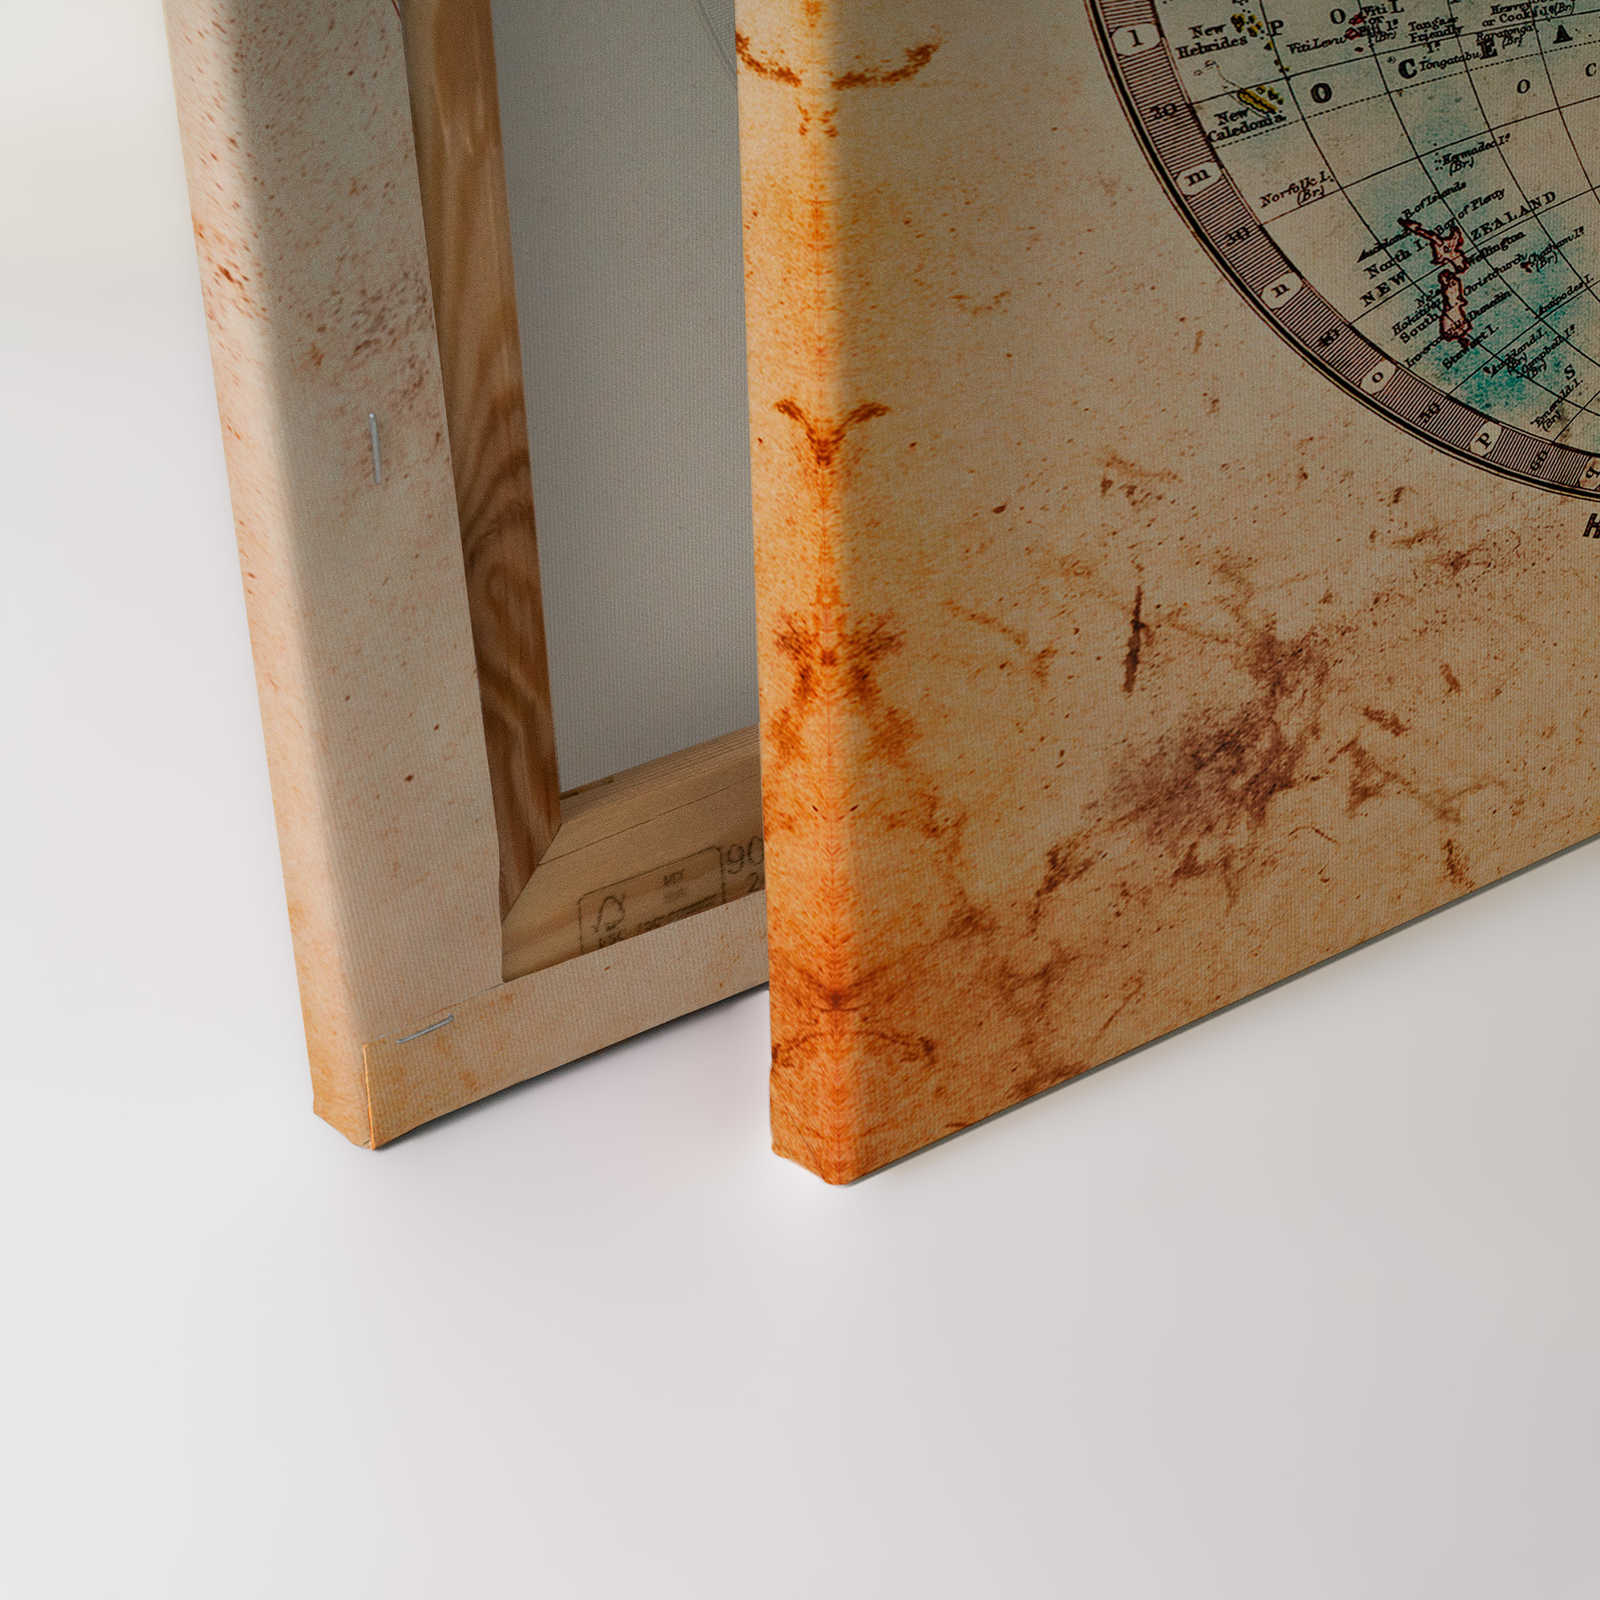             Lienzo con mapamundi vintage en hemisferios | marrón, beige, azul - 0,90 m x 0,60 m
        